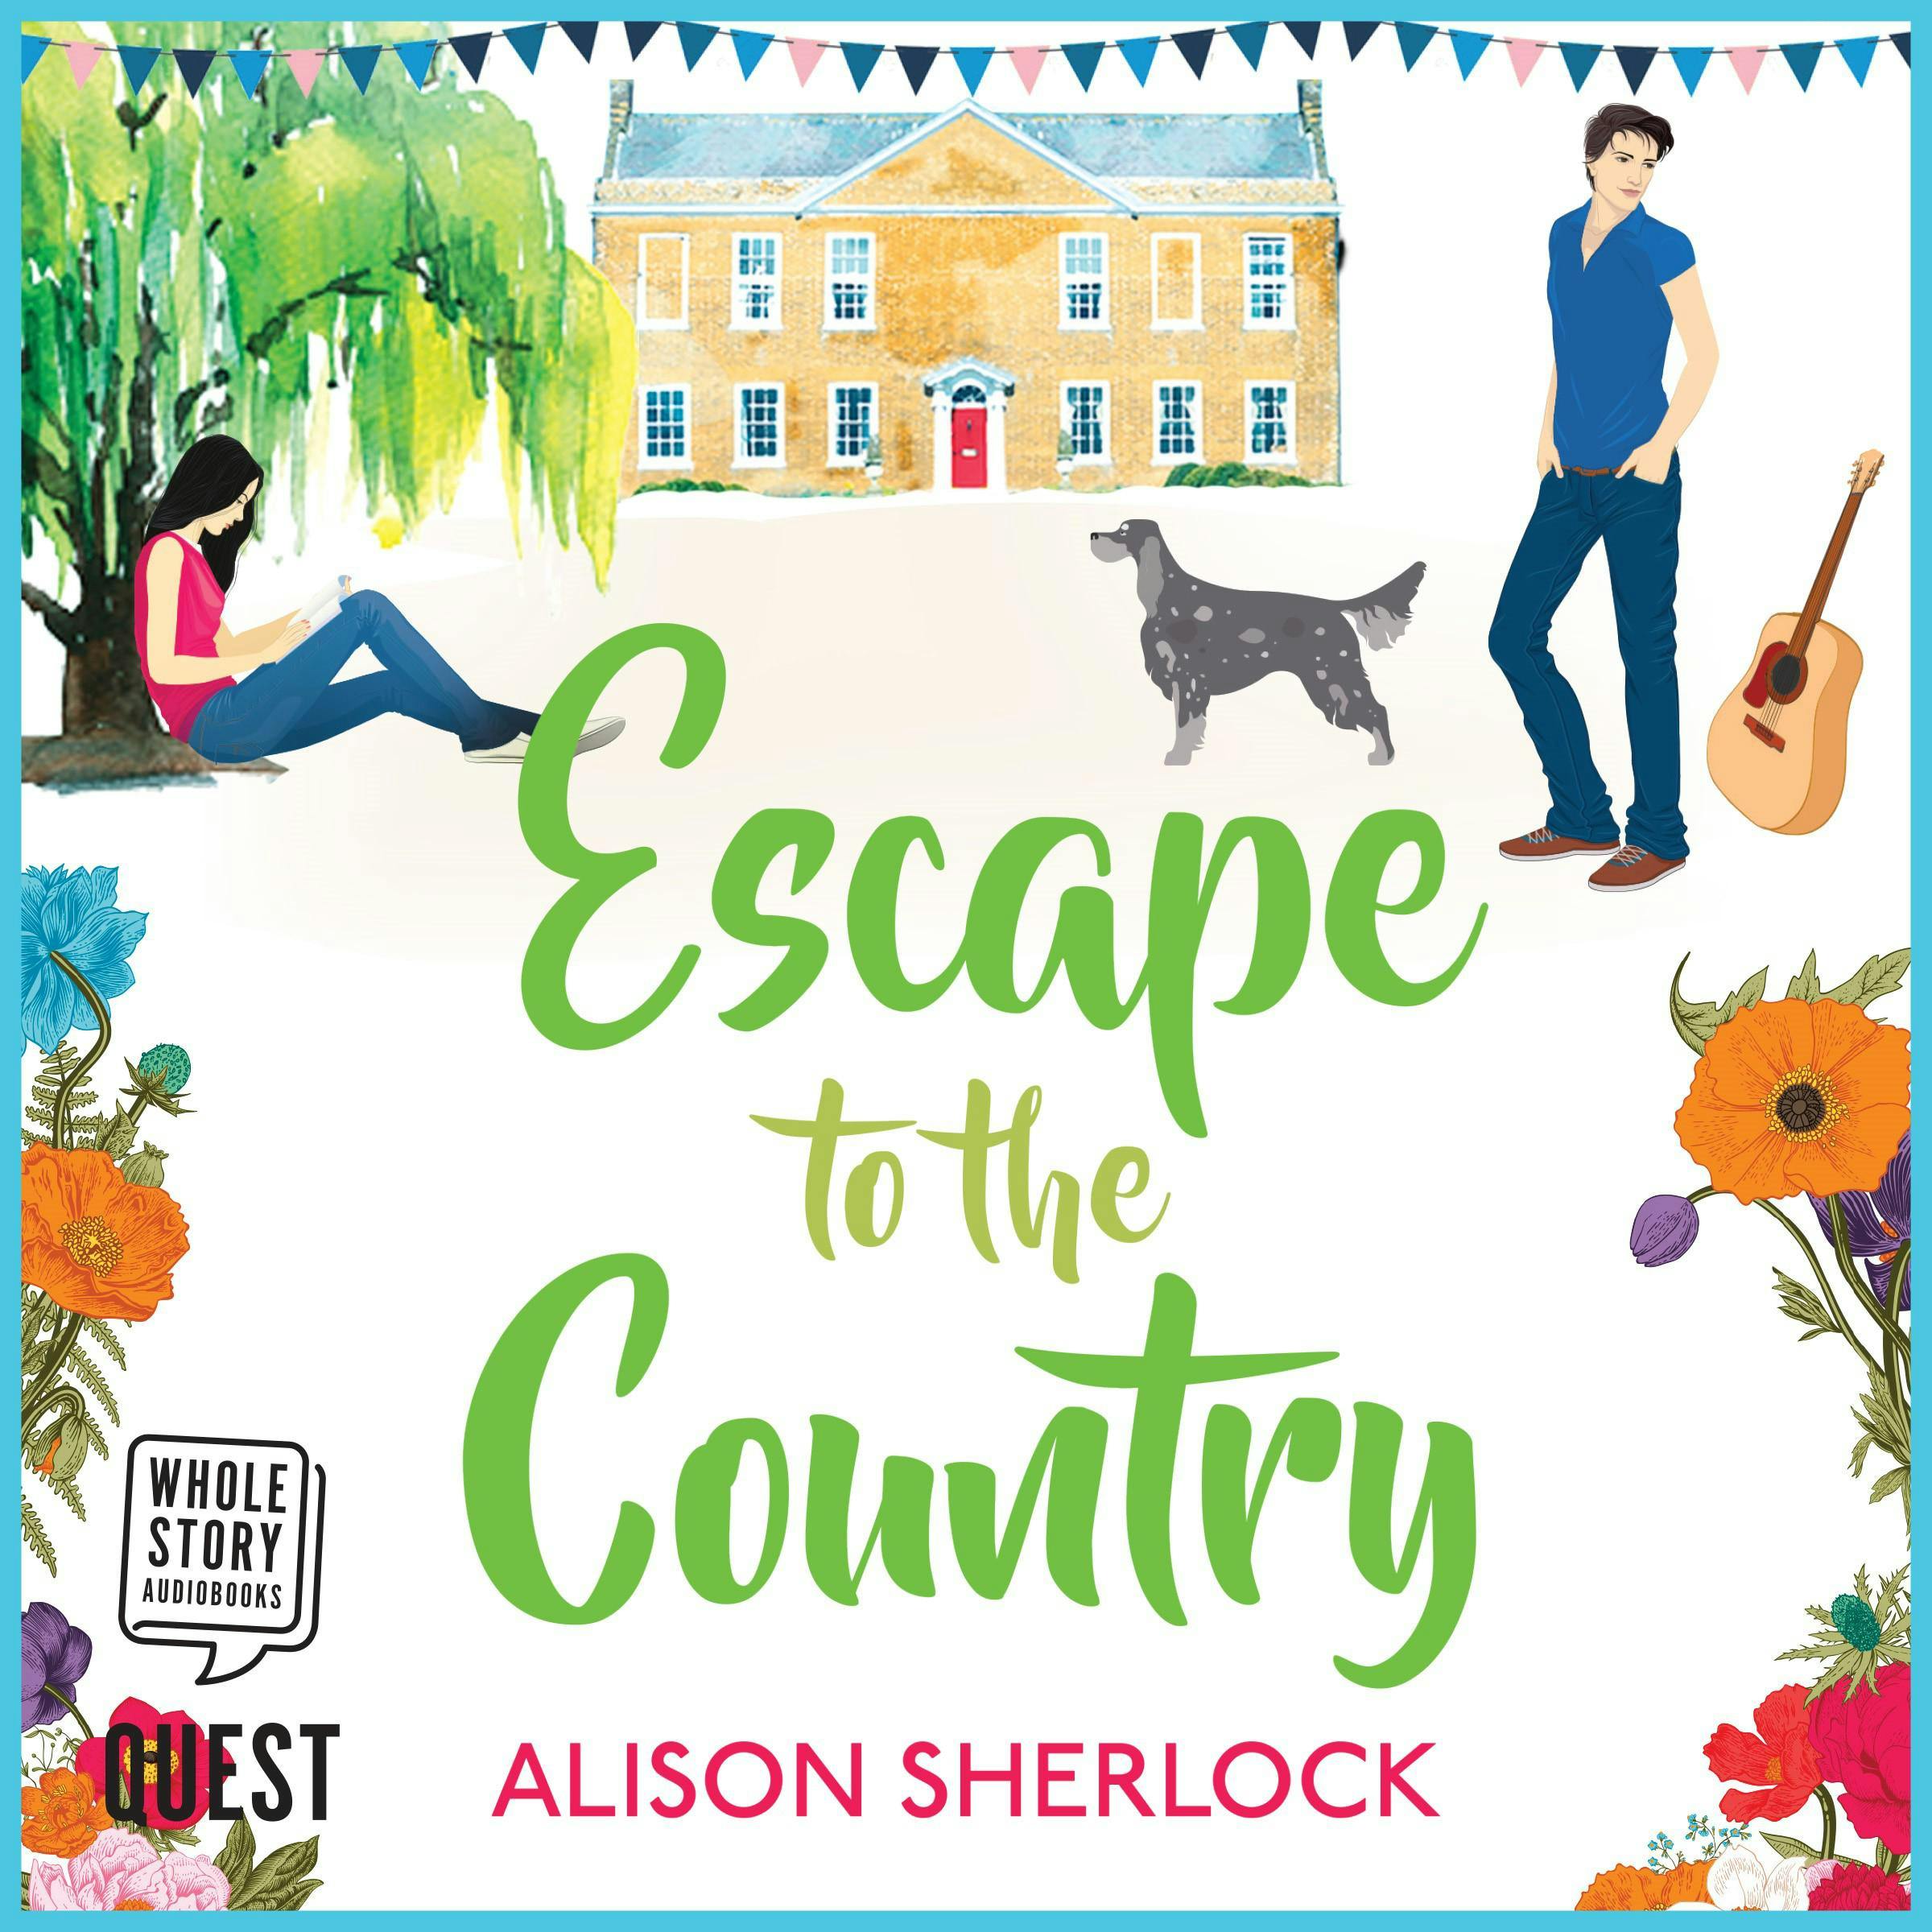 Escape to the Country - Alison Sherlock